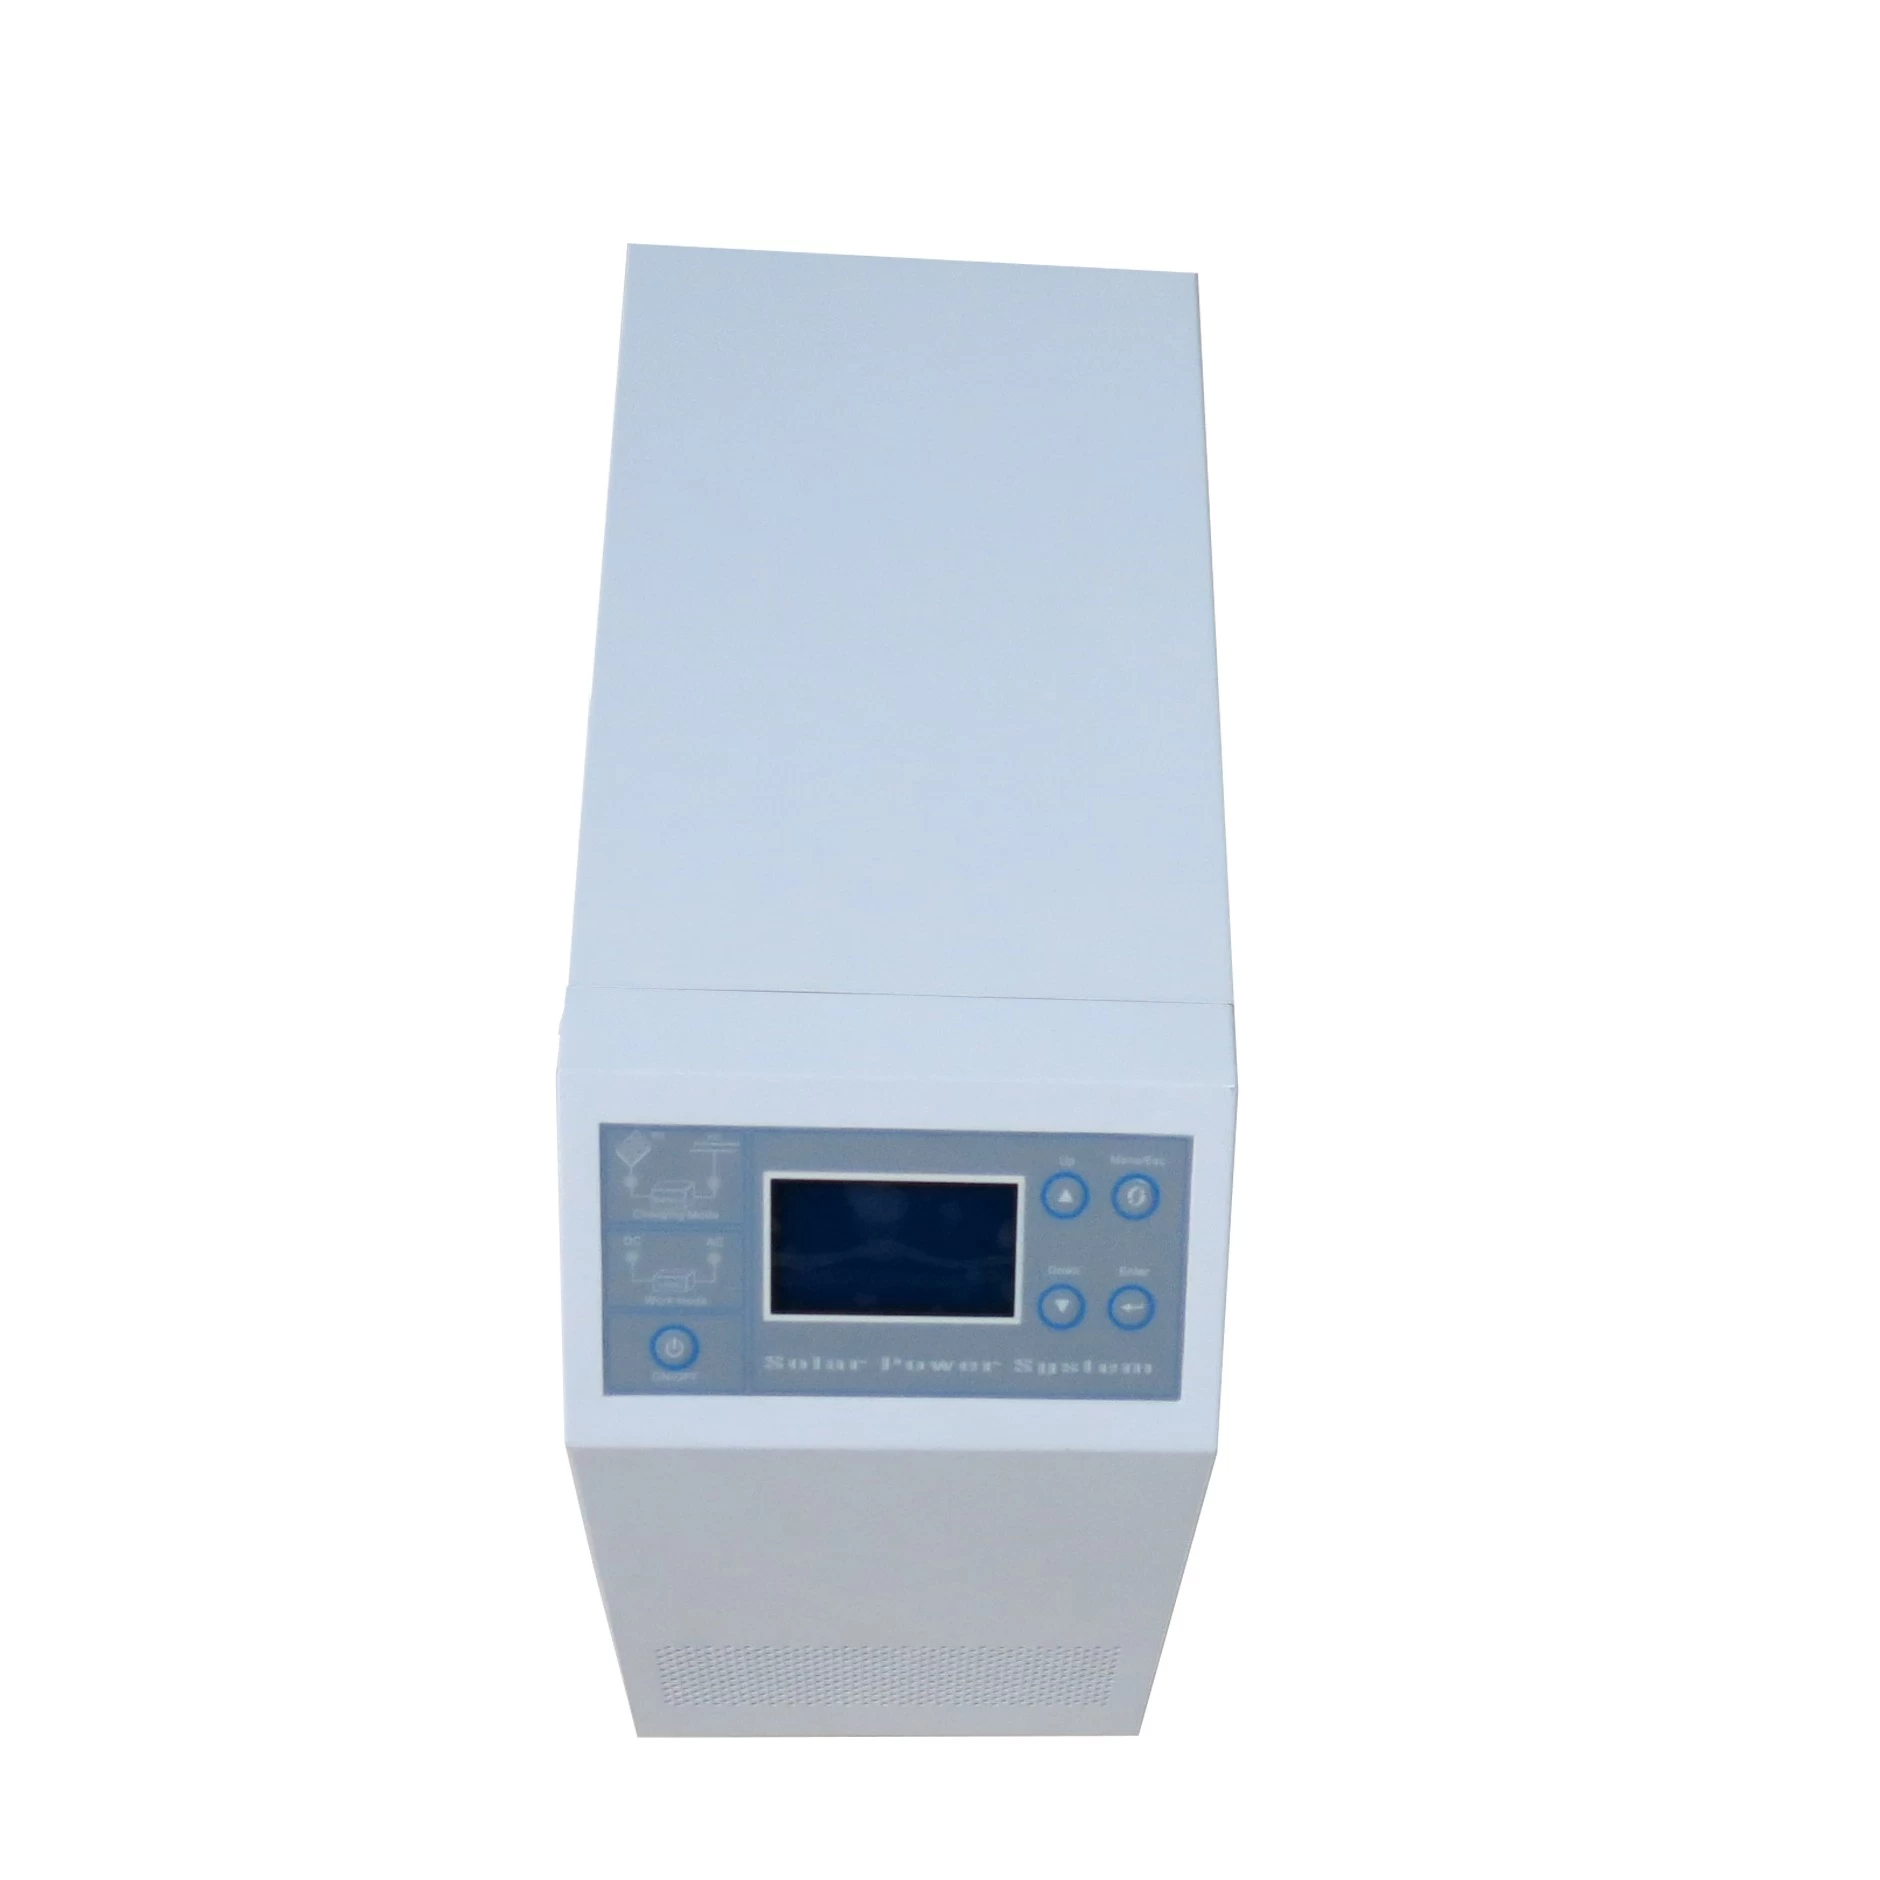 I-panda HPC series inverter, DC 24V 48V 3000W pure sine wave inverter with built-in MPPT solar charge controller